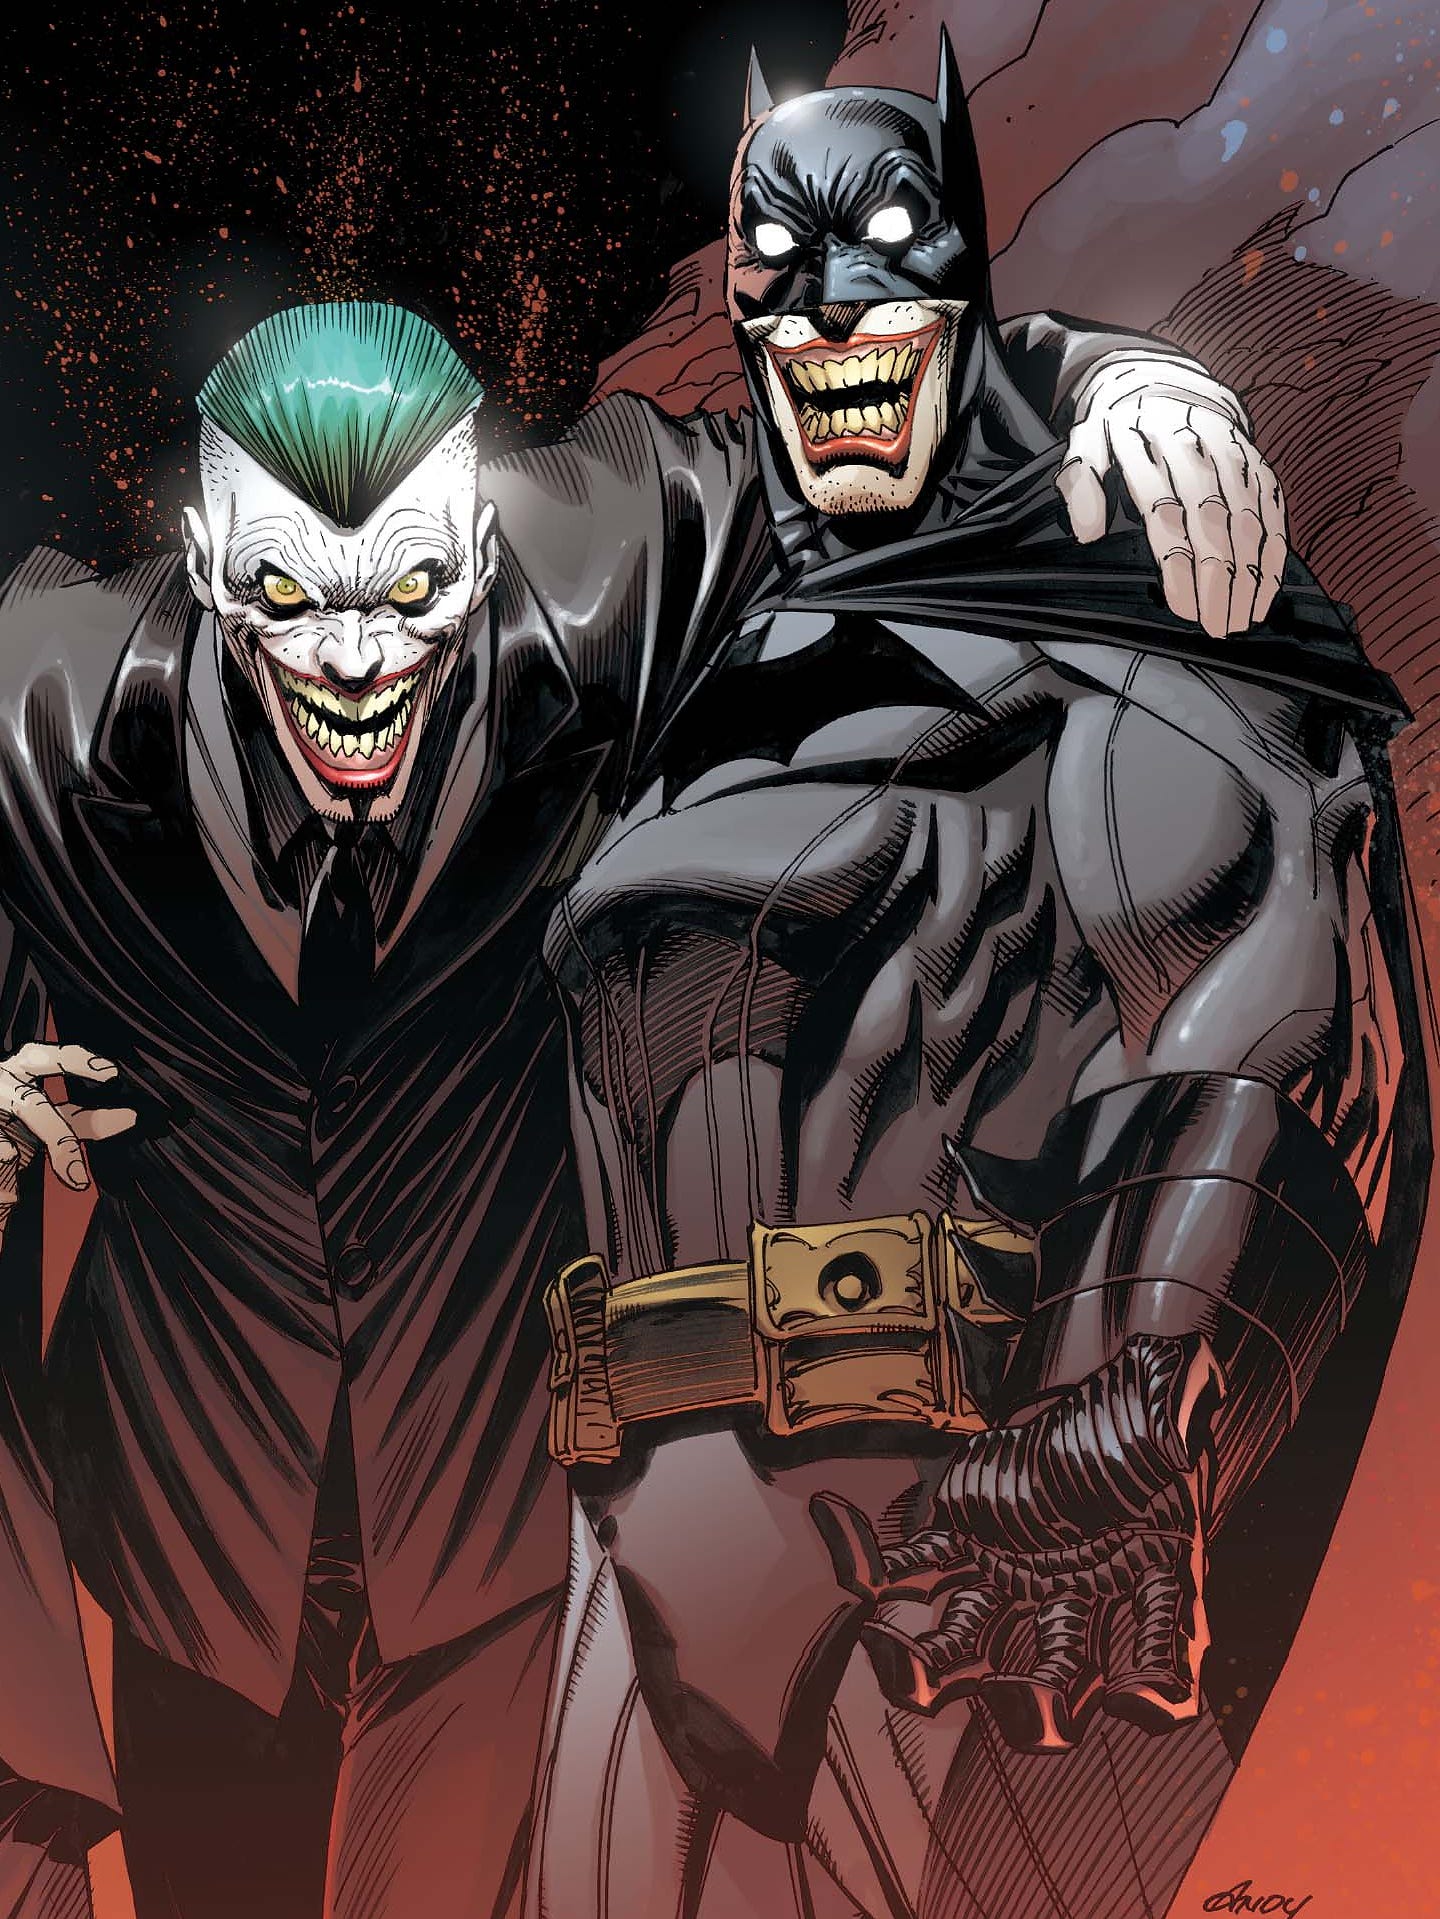 Batman, Joker engage in fatal 'Endgame'